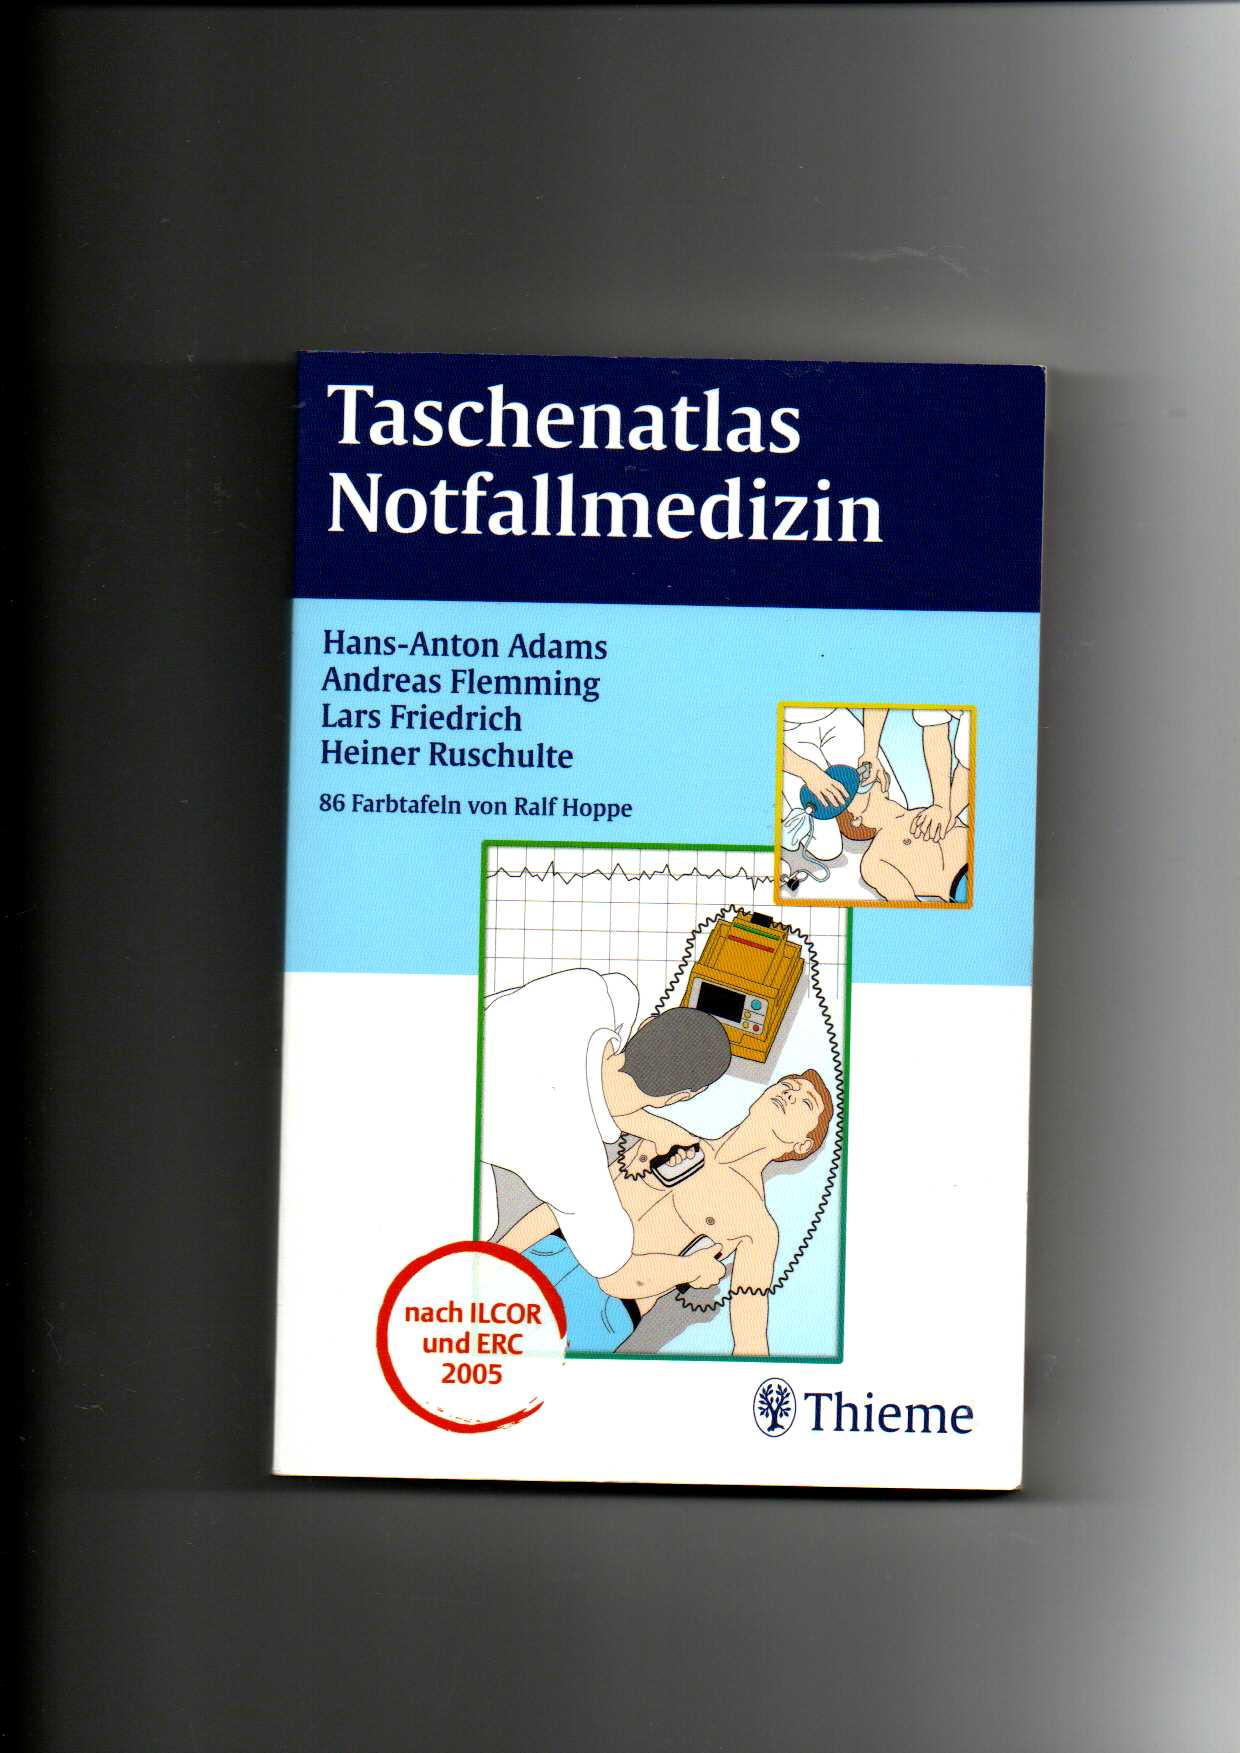 Hans-Anton Adams, Taschenatlas Notfallmedizin (2007) - Adams, Hans Anton und Ralf (Ill.) Hoppe